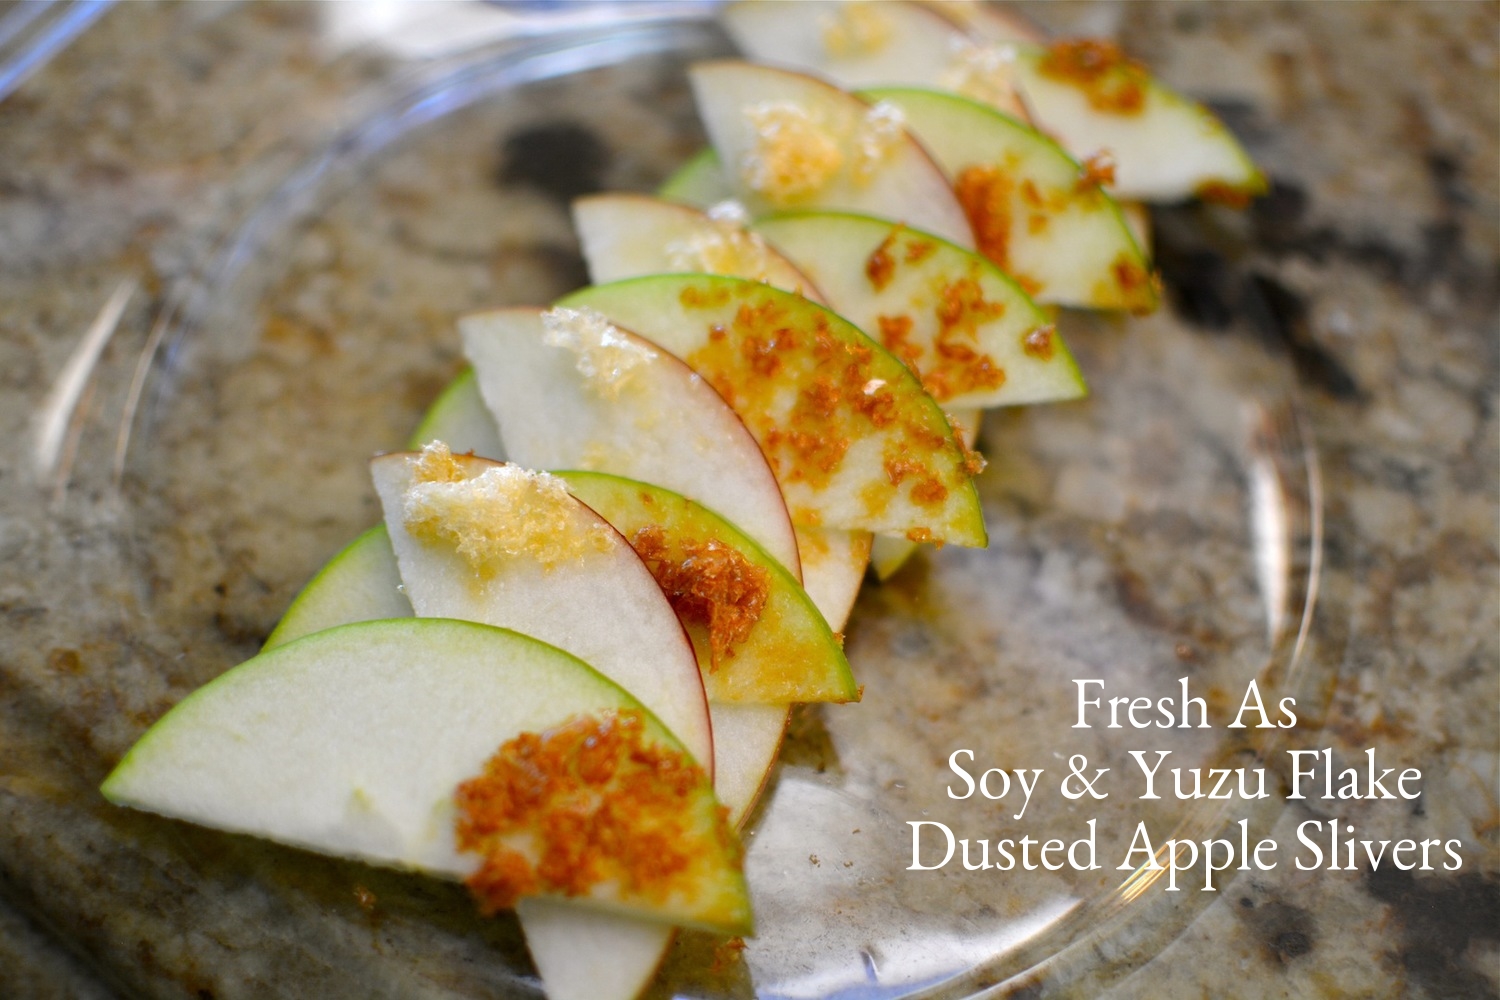 Fresh Apple Slivers dusted w yuzu & Soy flakes.JPG